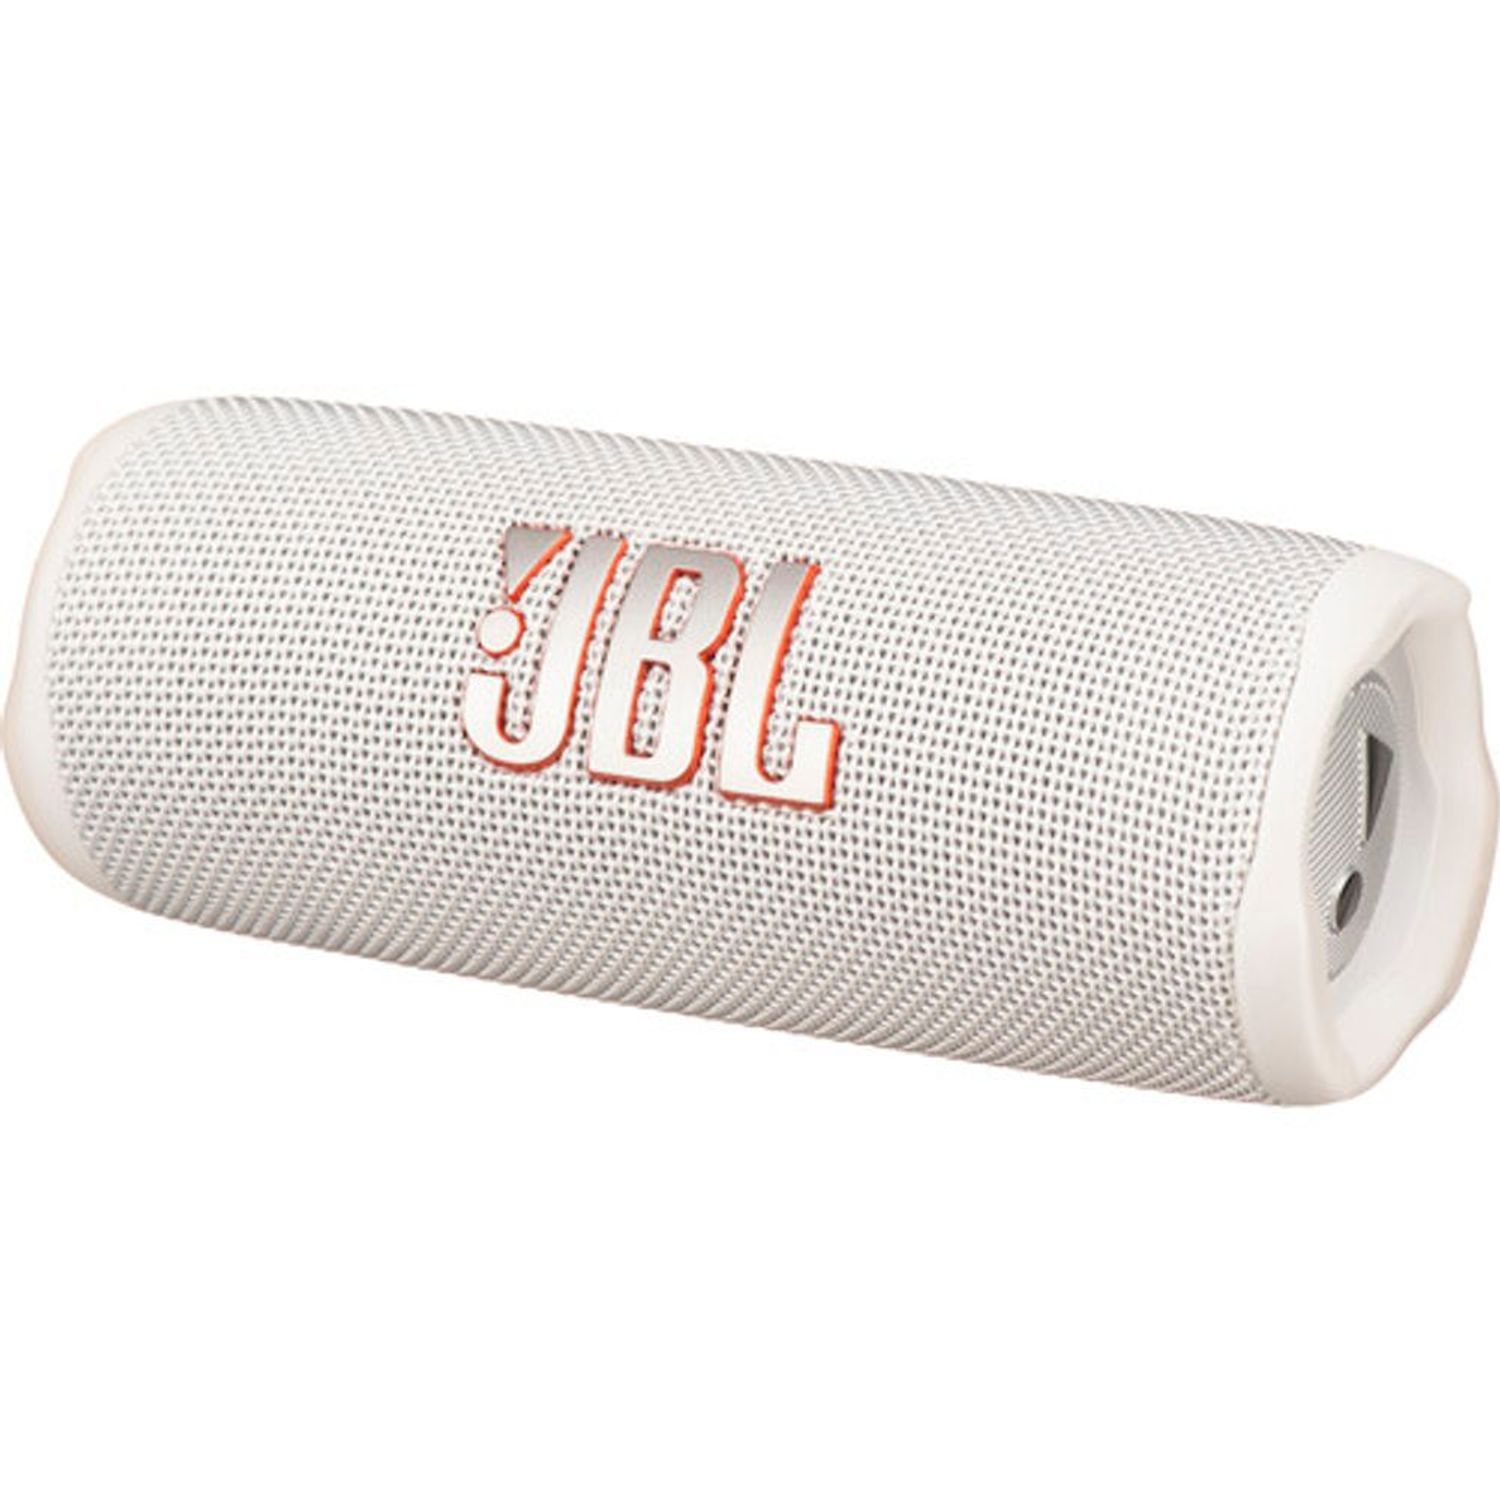 Parlante JBL Flip 6 - Altavoz - para us